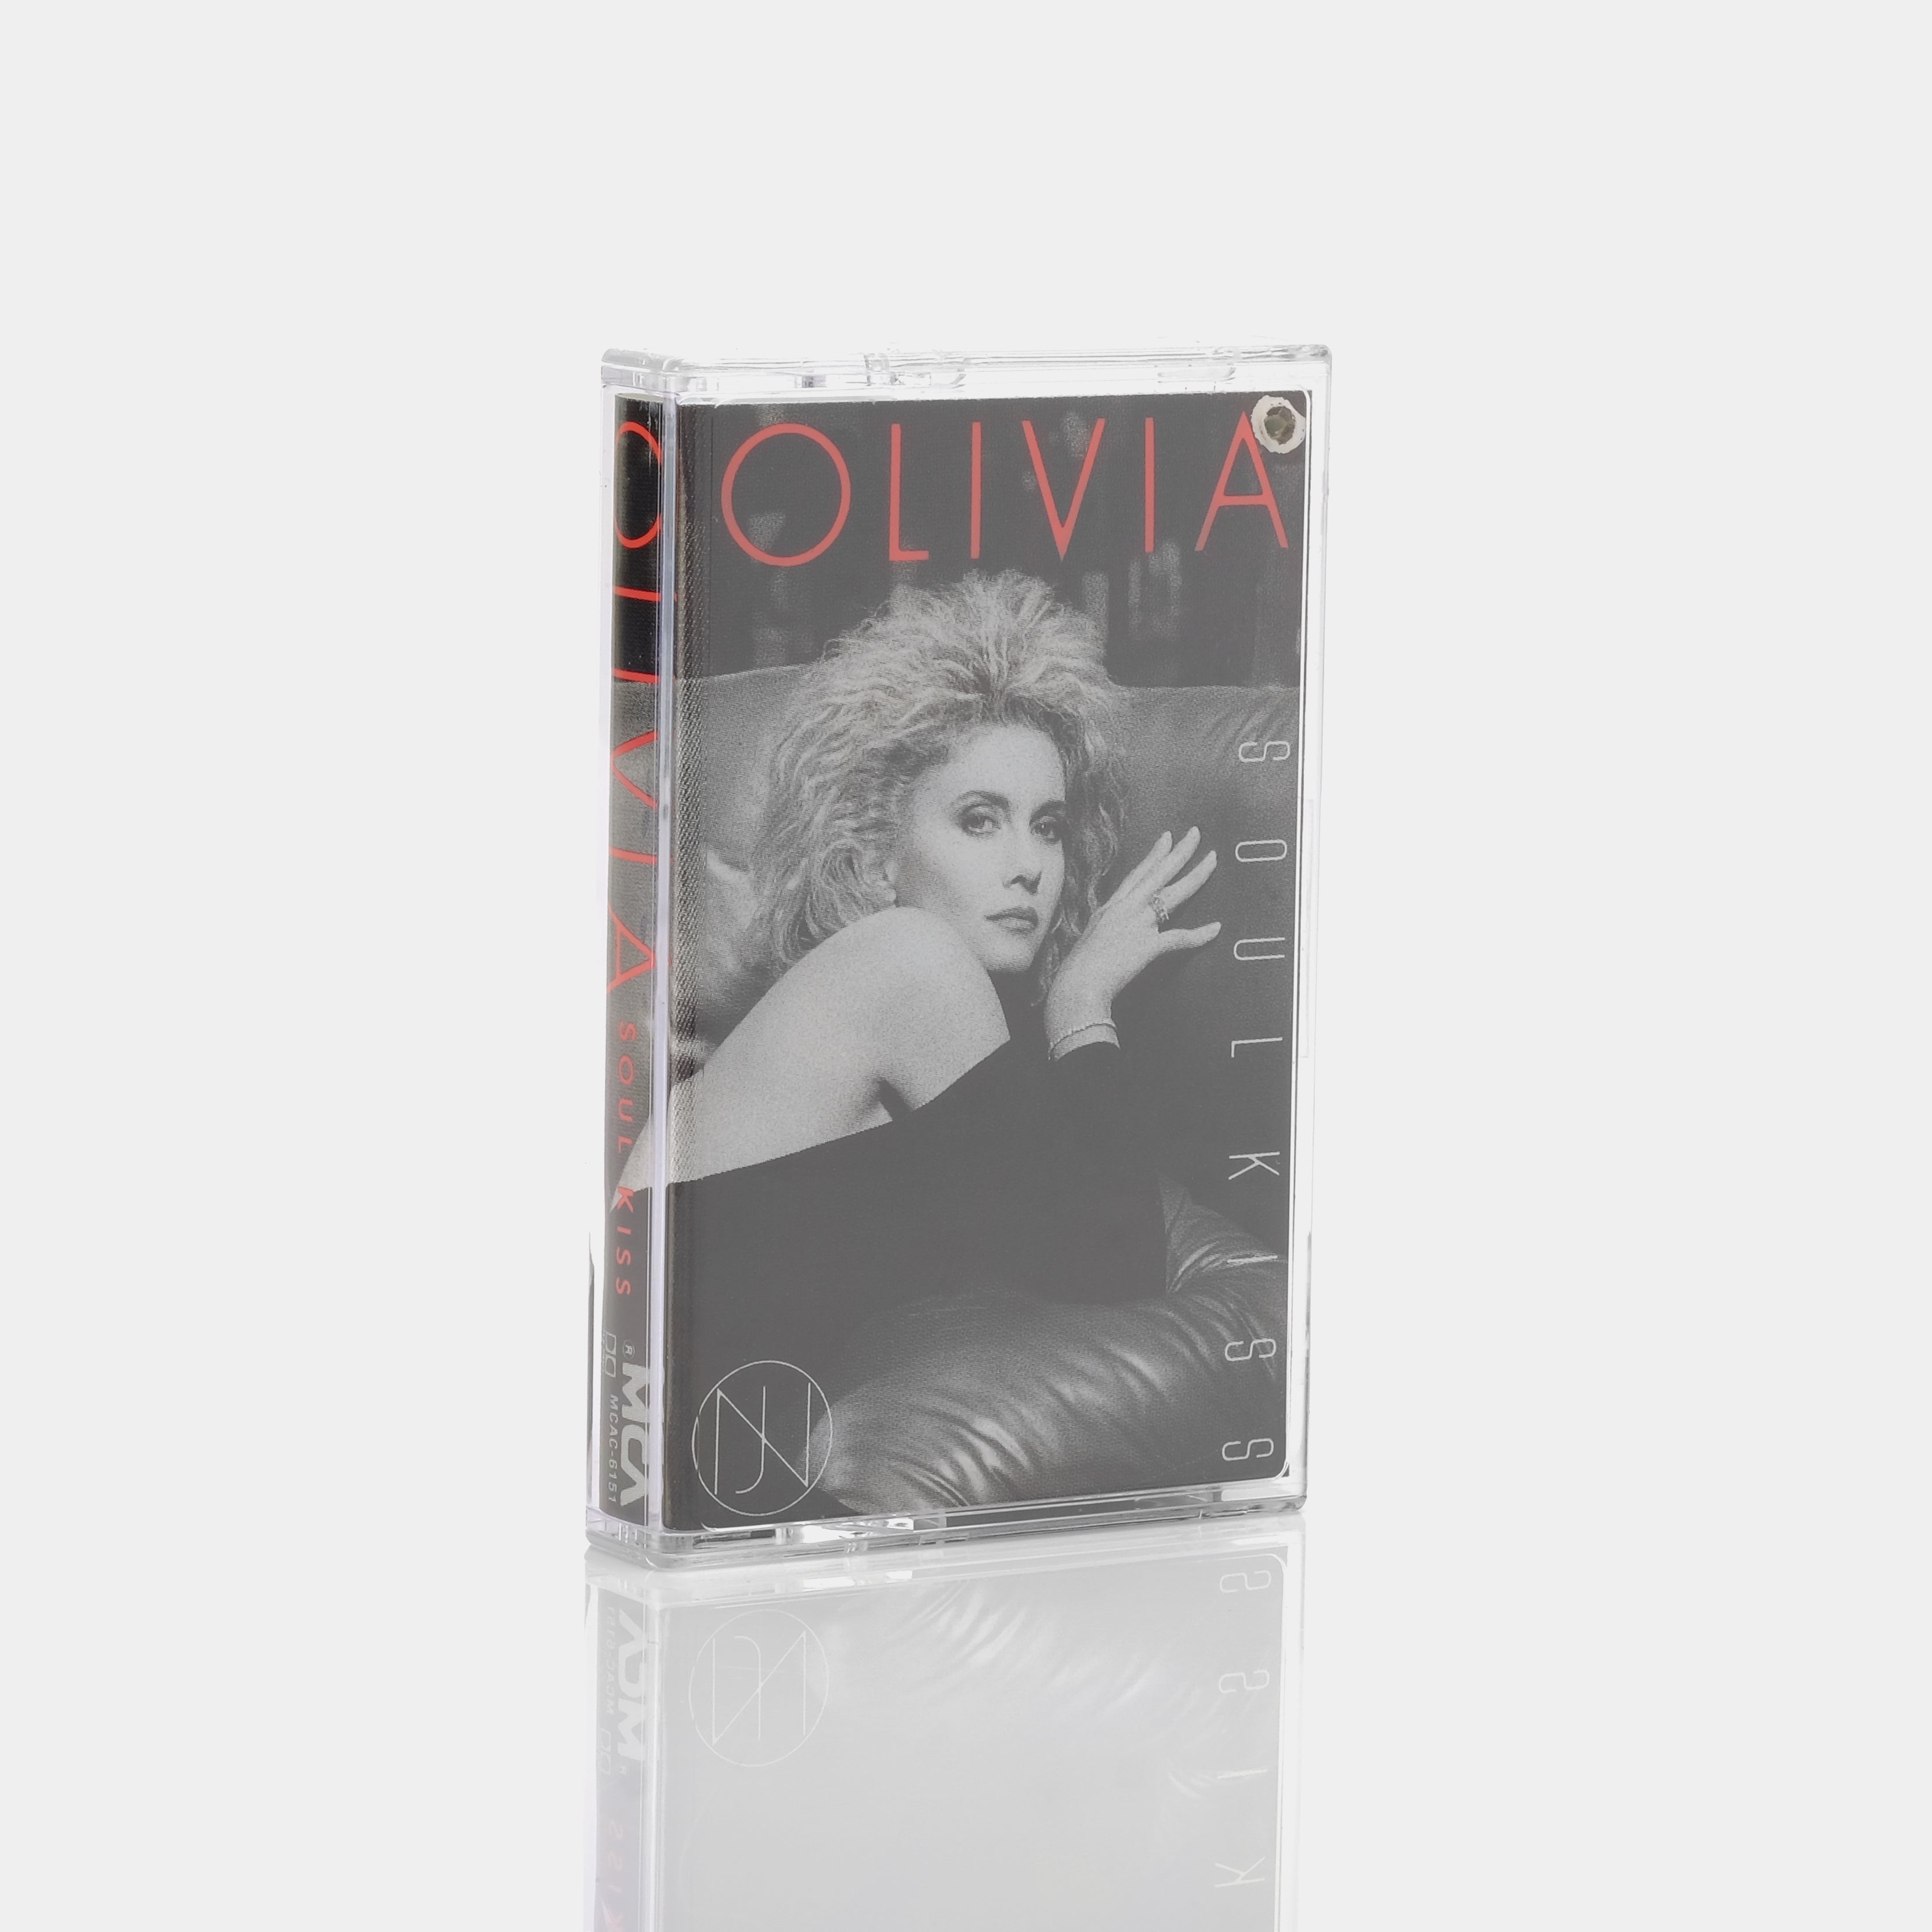 Olivia - Soul Kiss Cassette Tape